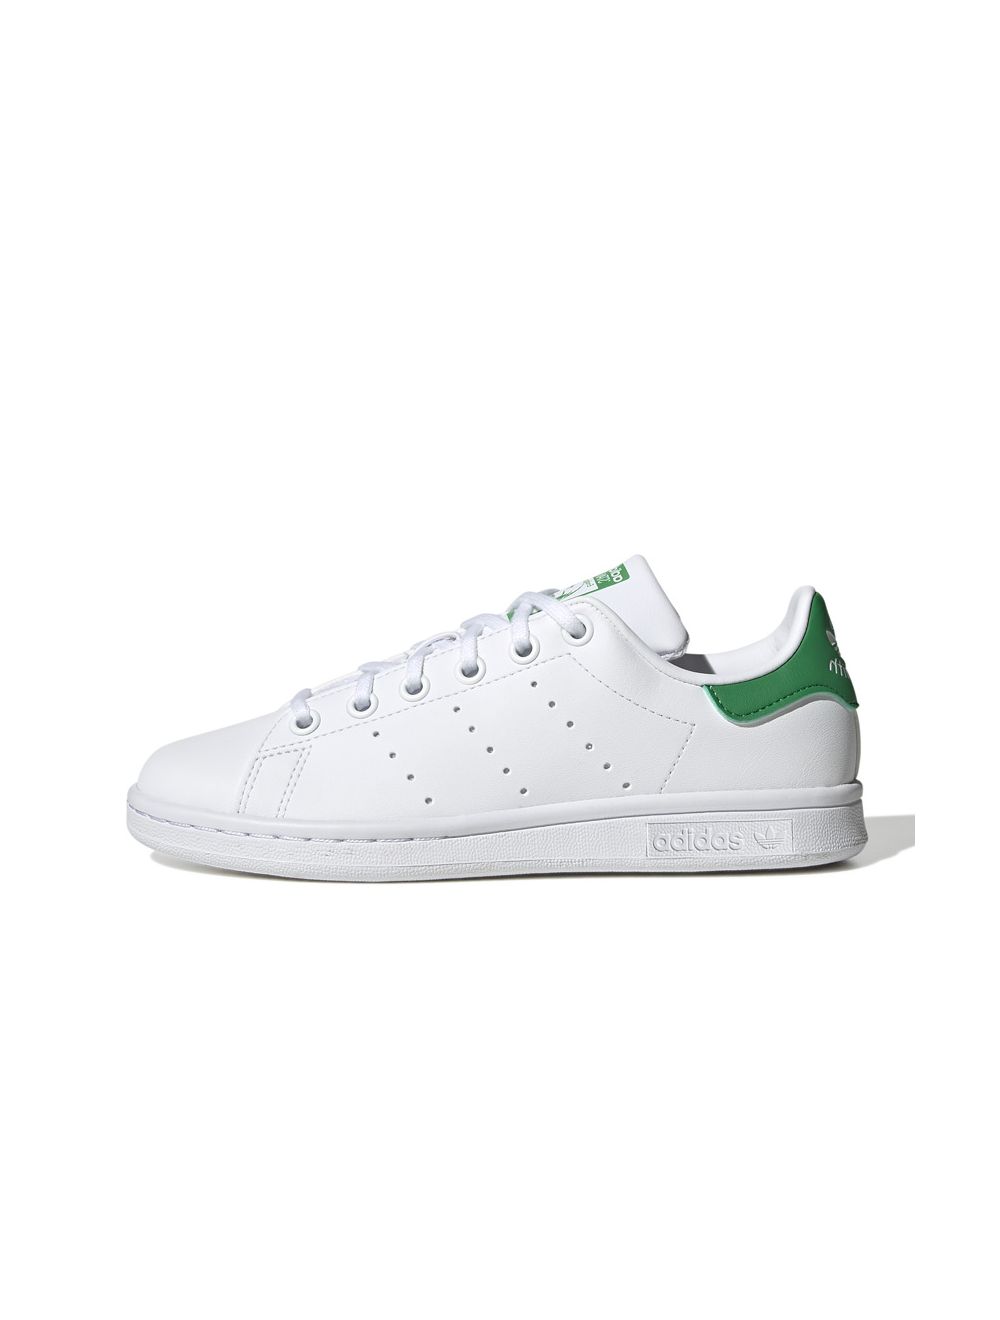 Shop adidas Originals Stan Smith Youth Shoes White Green | Studio